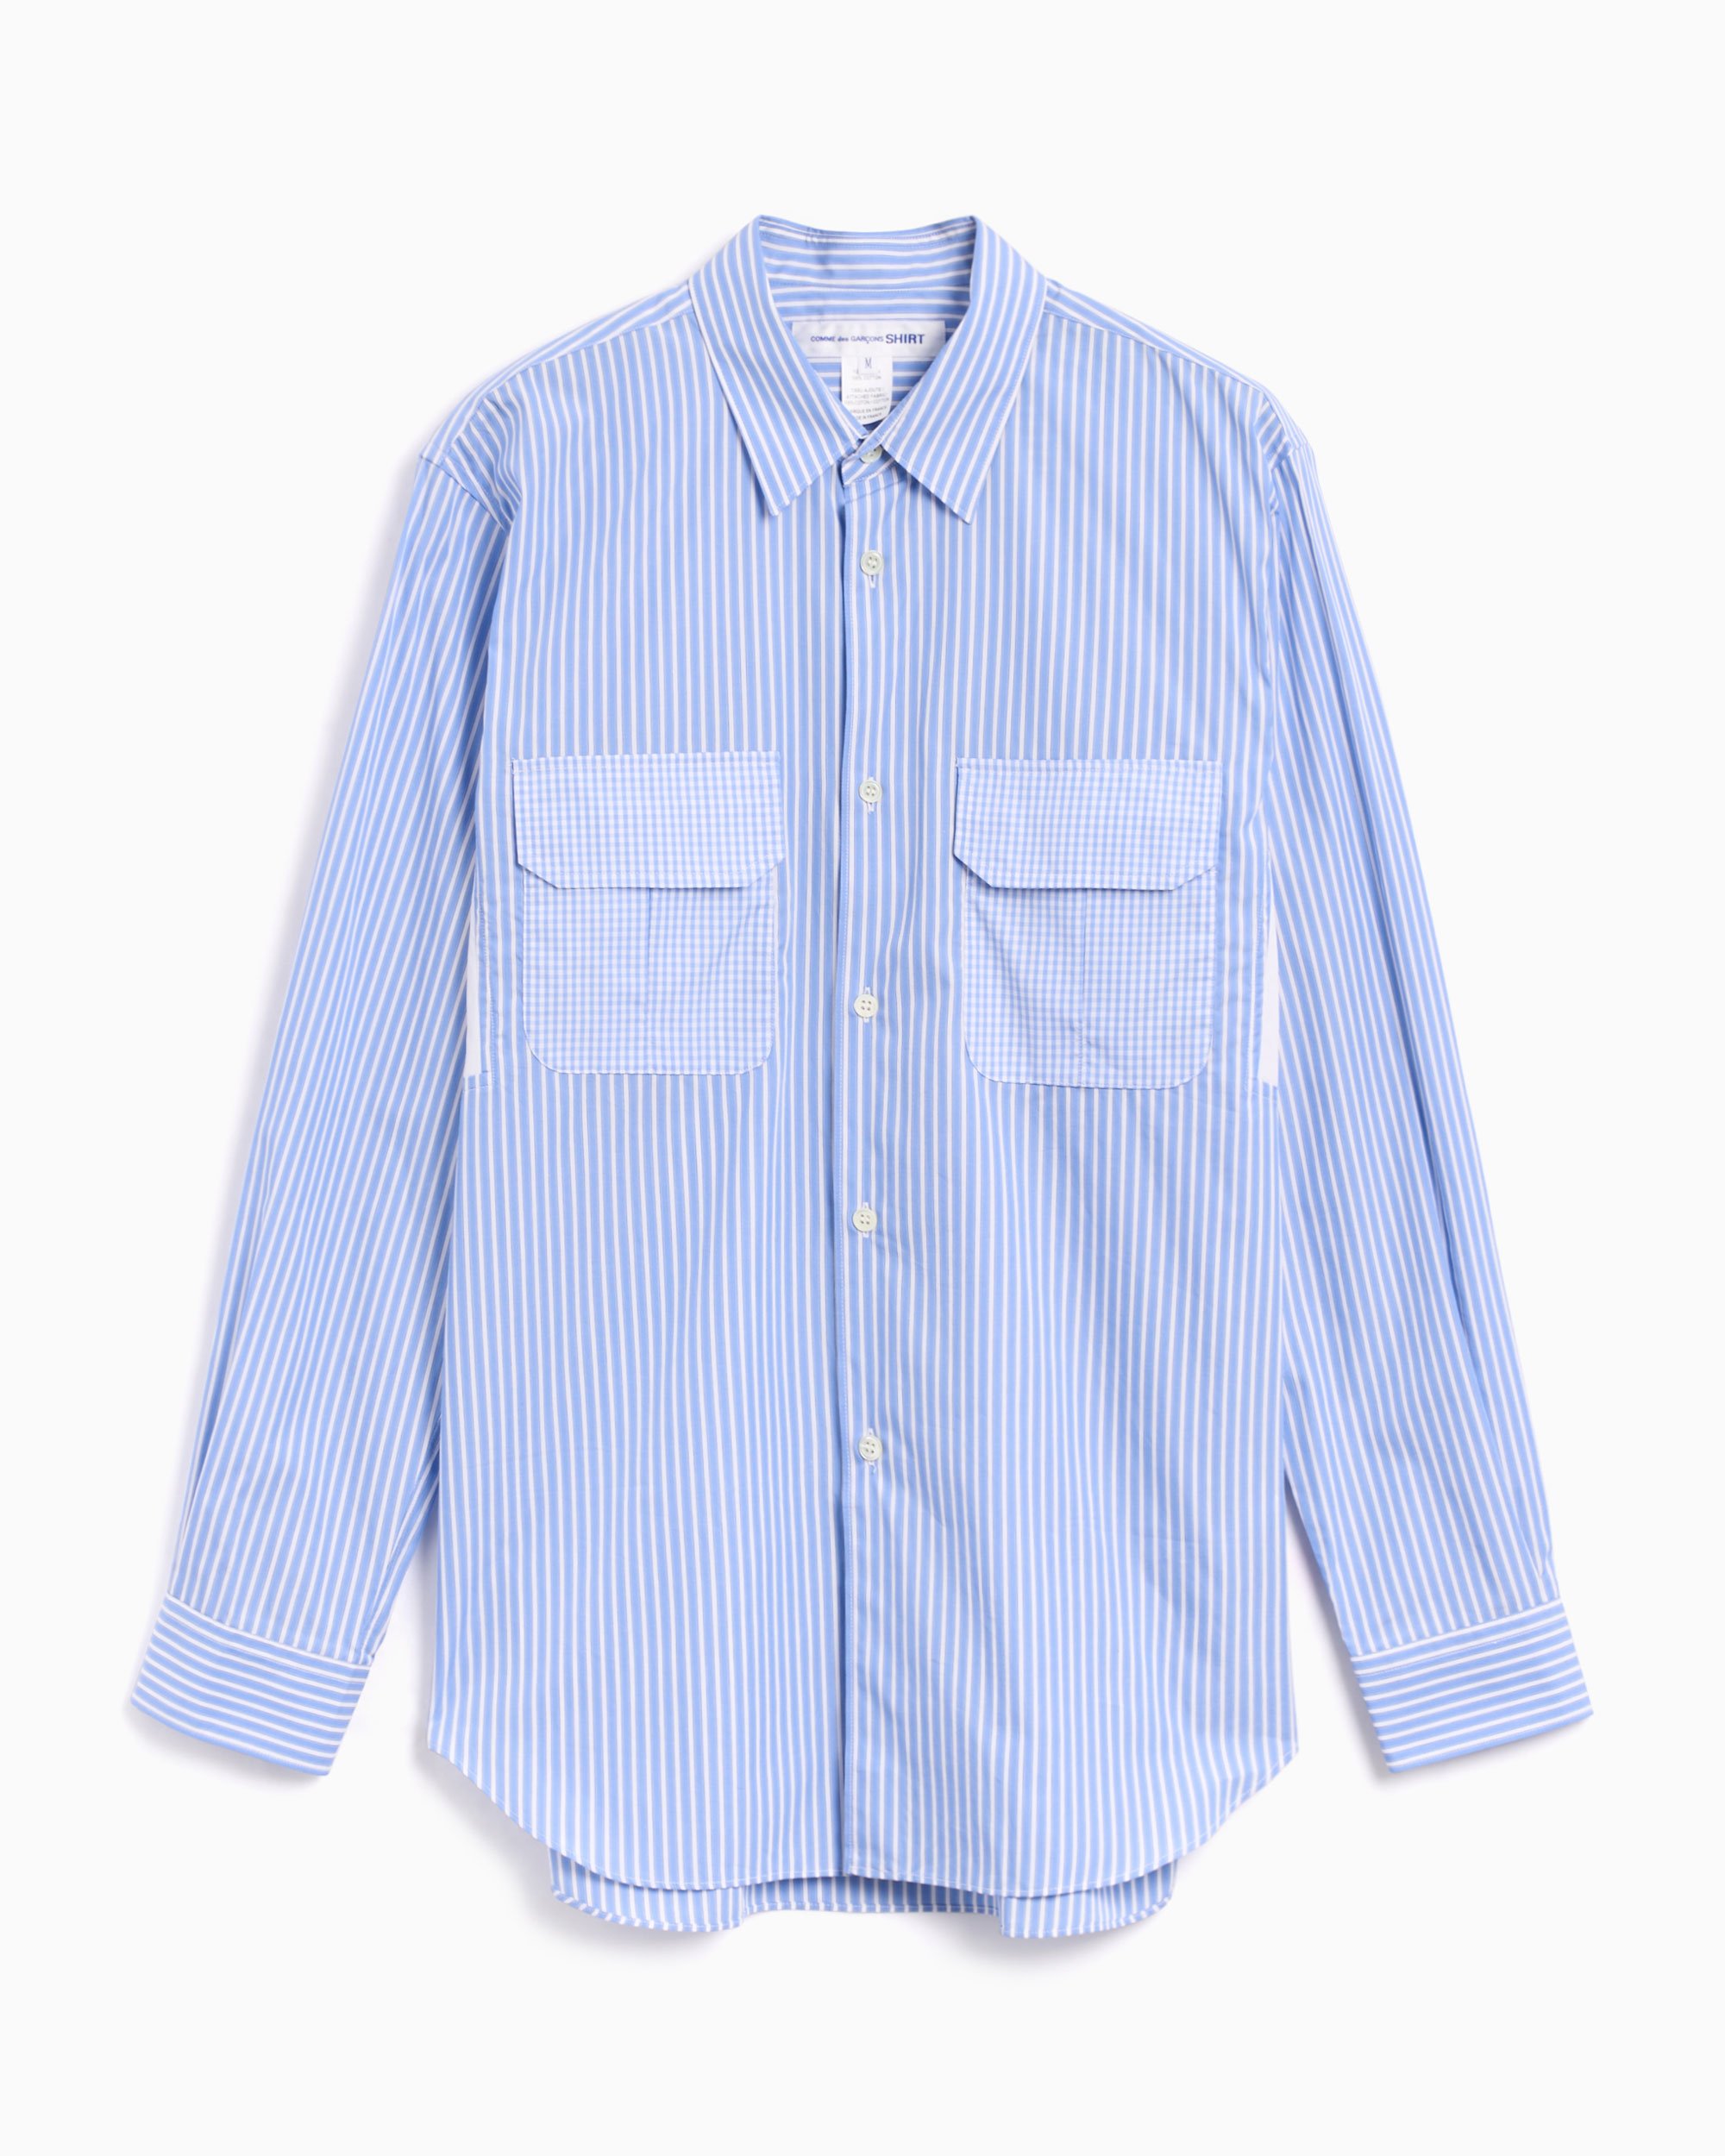 Comme Des Garçons Shirt Men's Woven Shirt Blue, White FM-B049-S24 